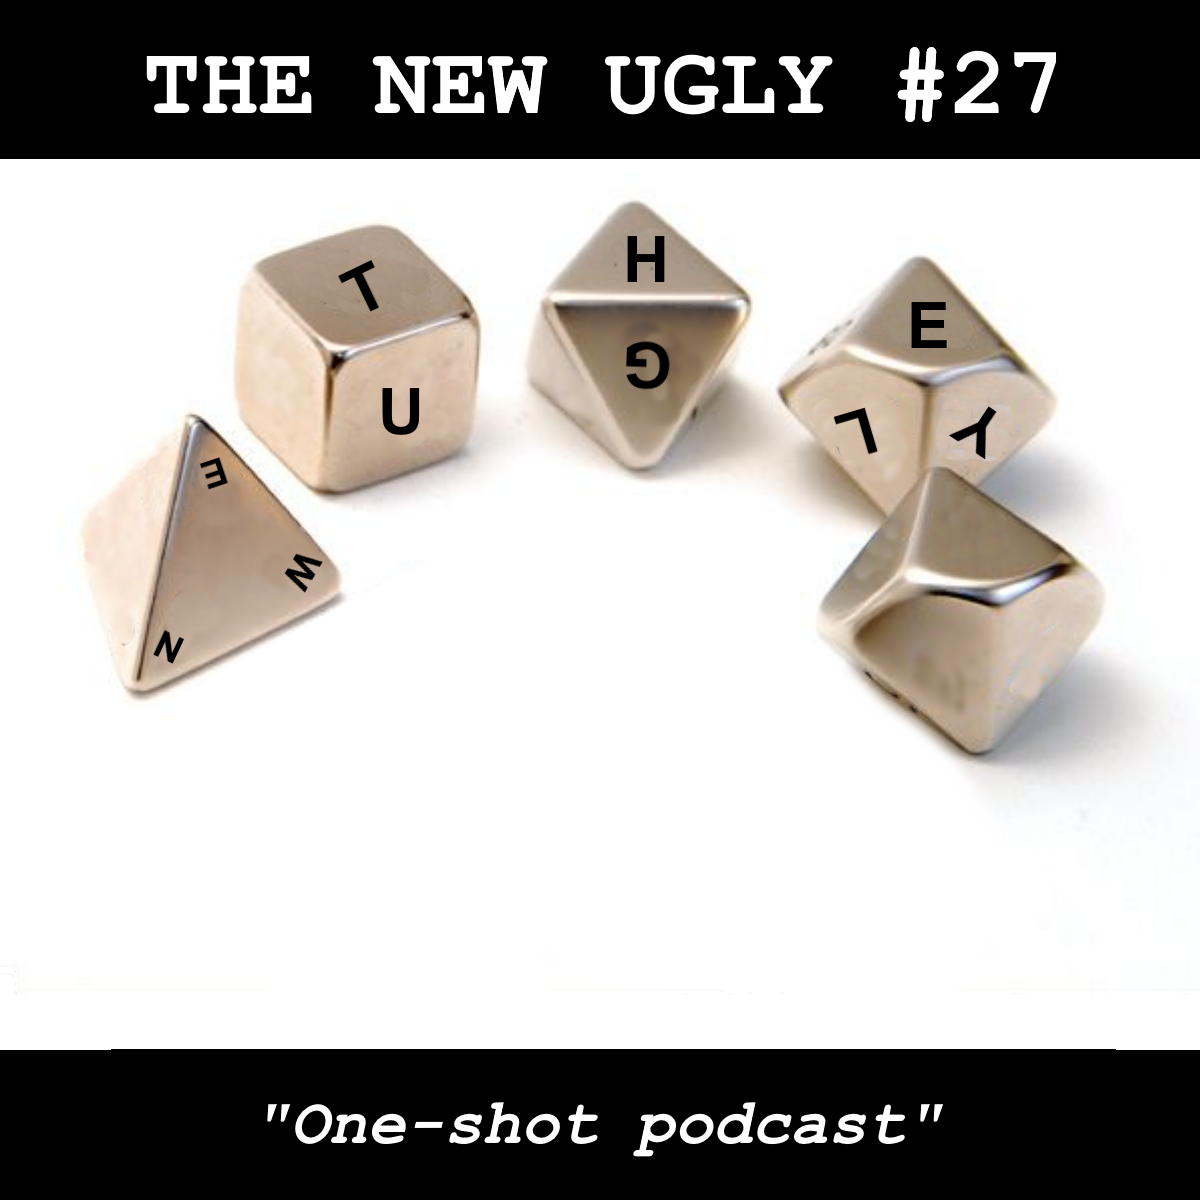 Episode 27: One-shot podcast